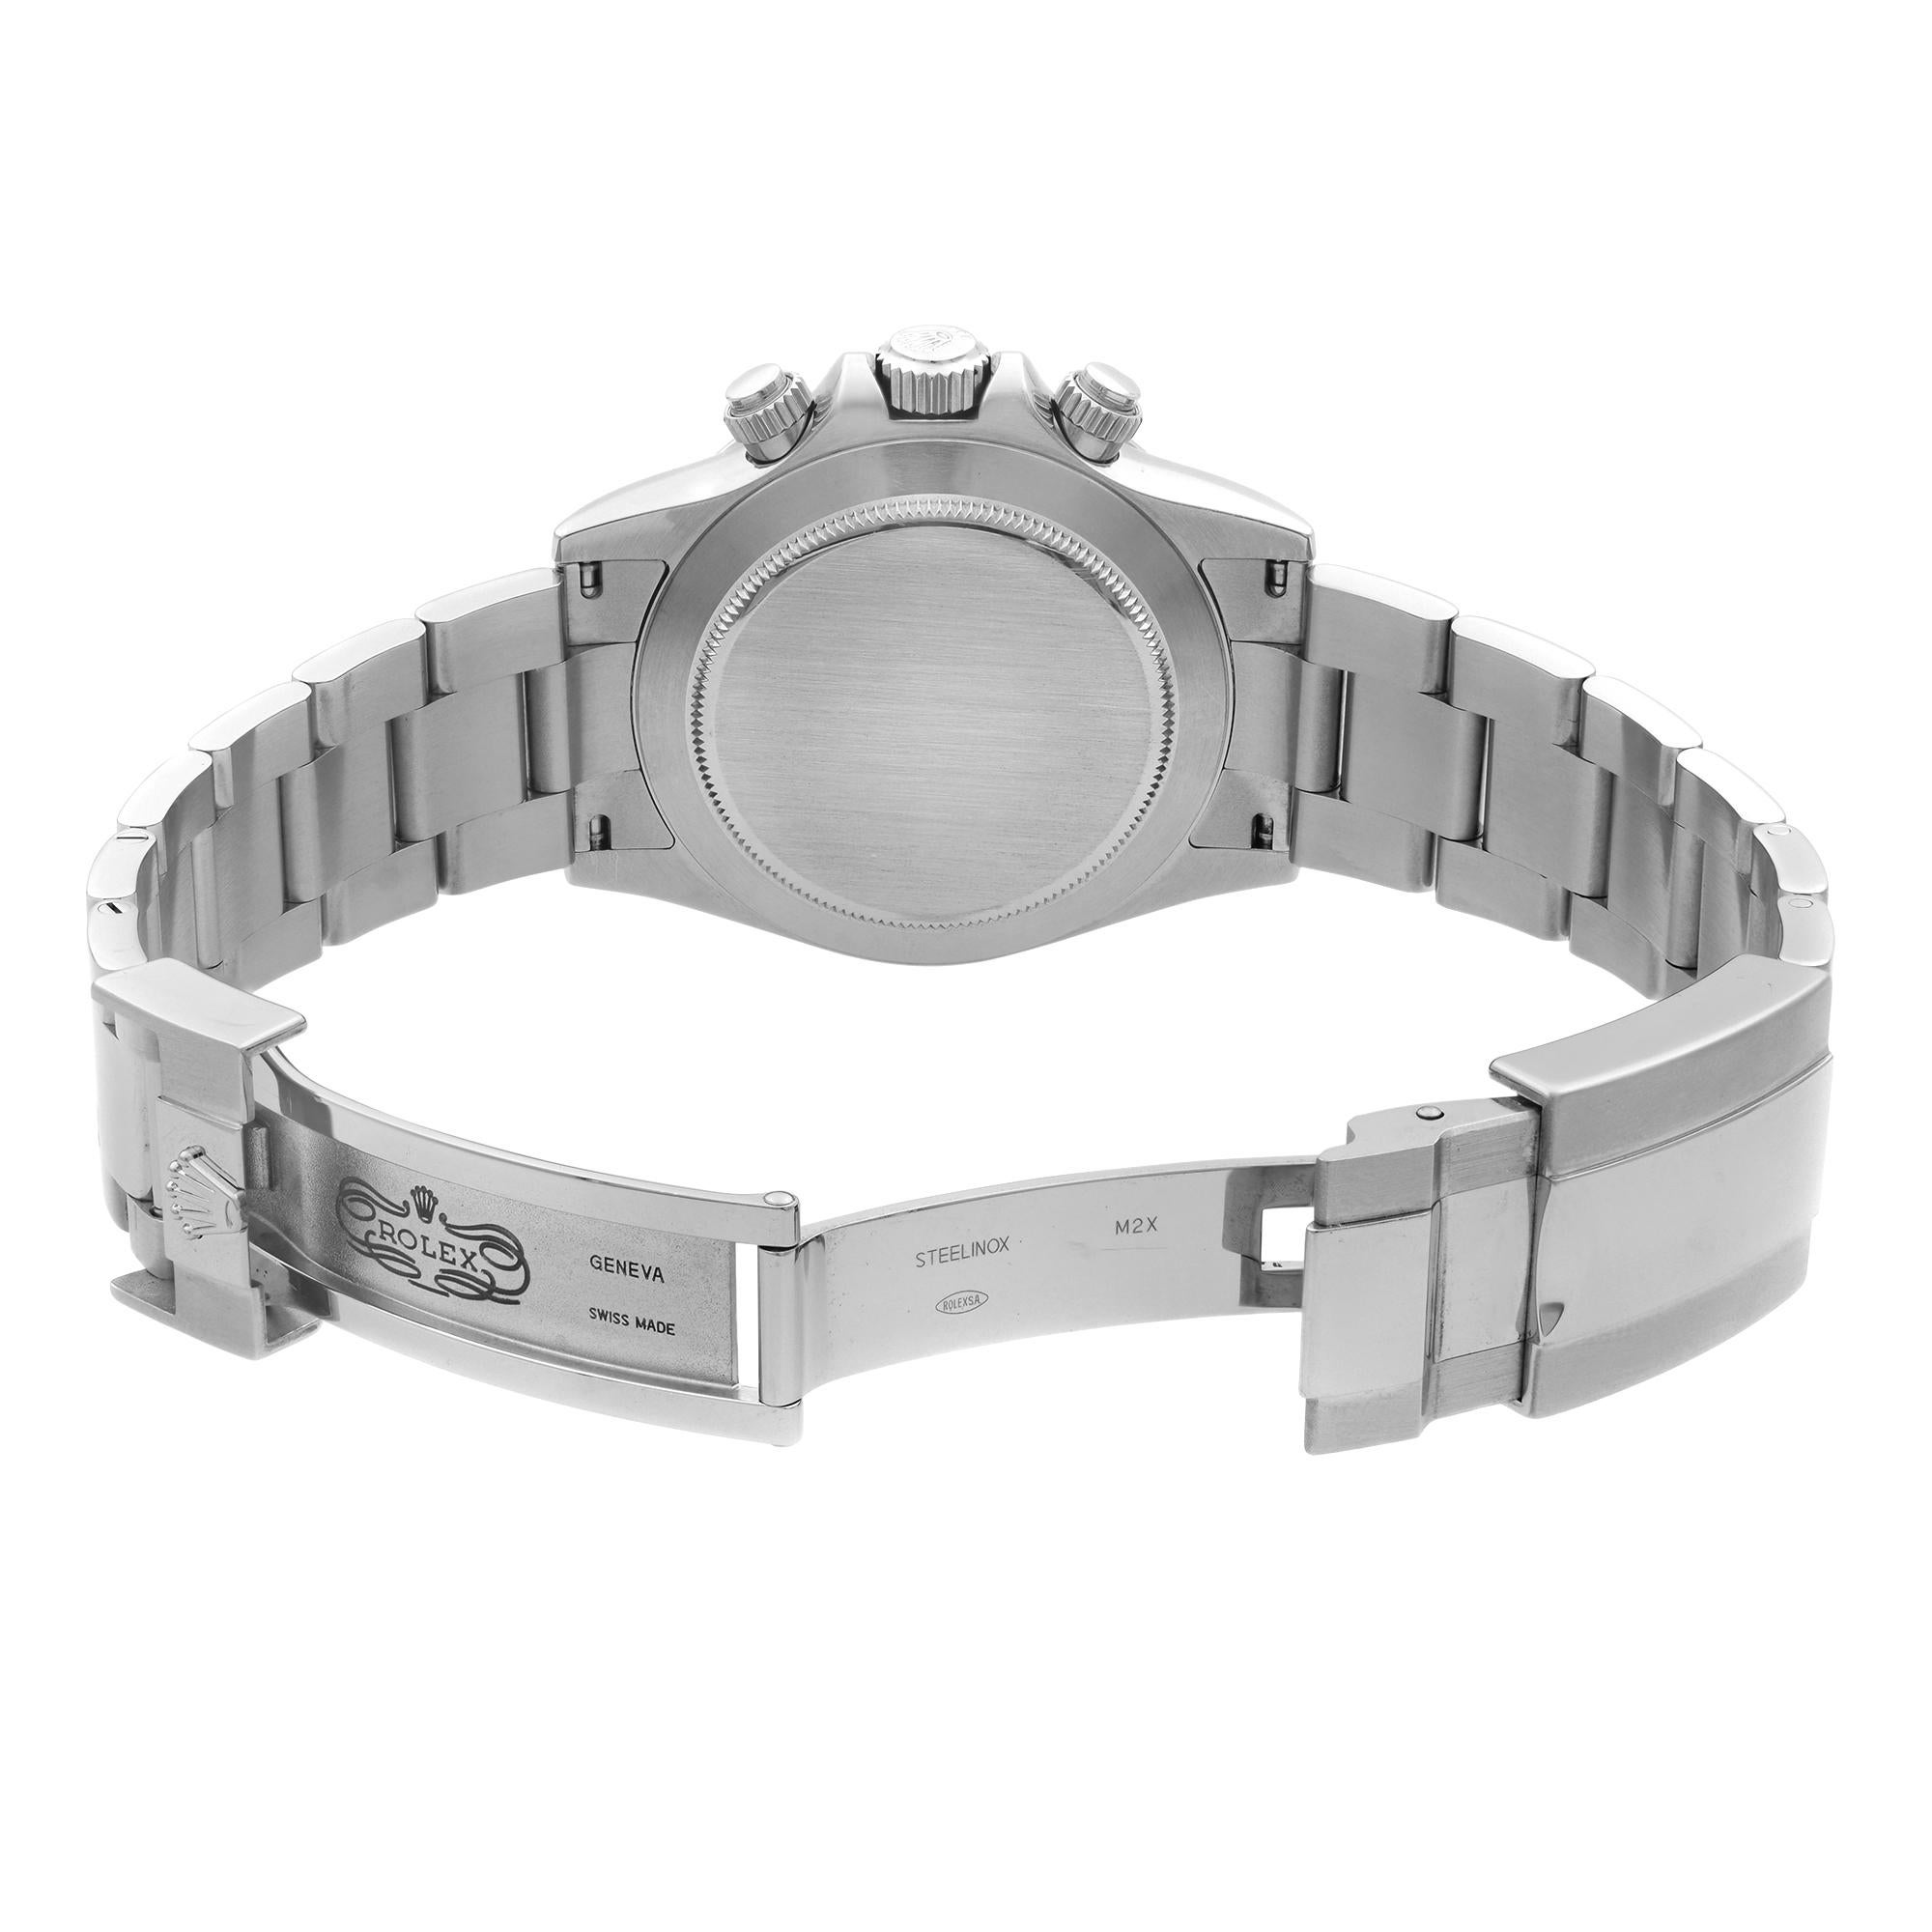 Rolex Daytona Chronograph Steel Black Dial Automatic Mens Watch 116520 2